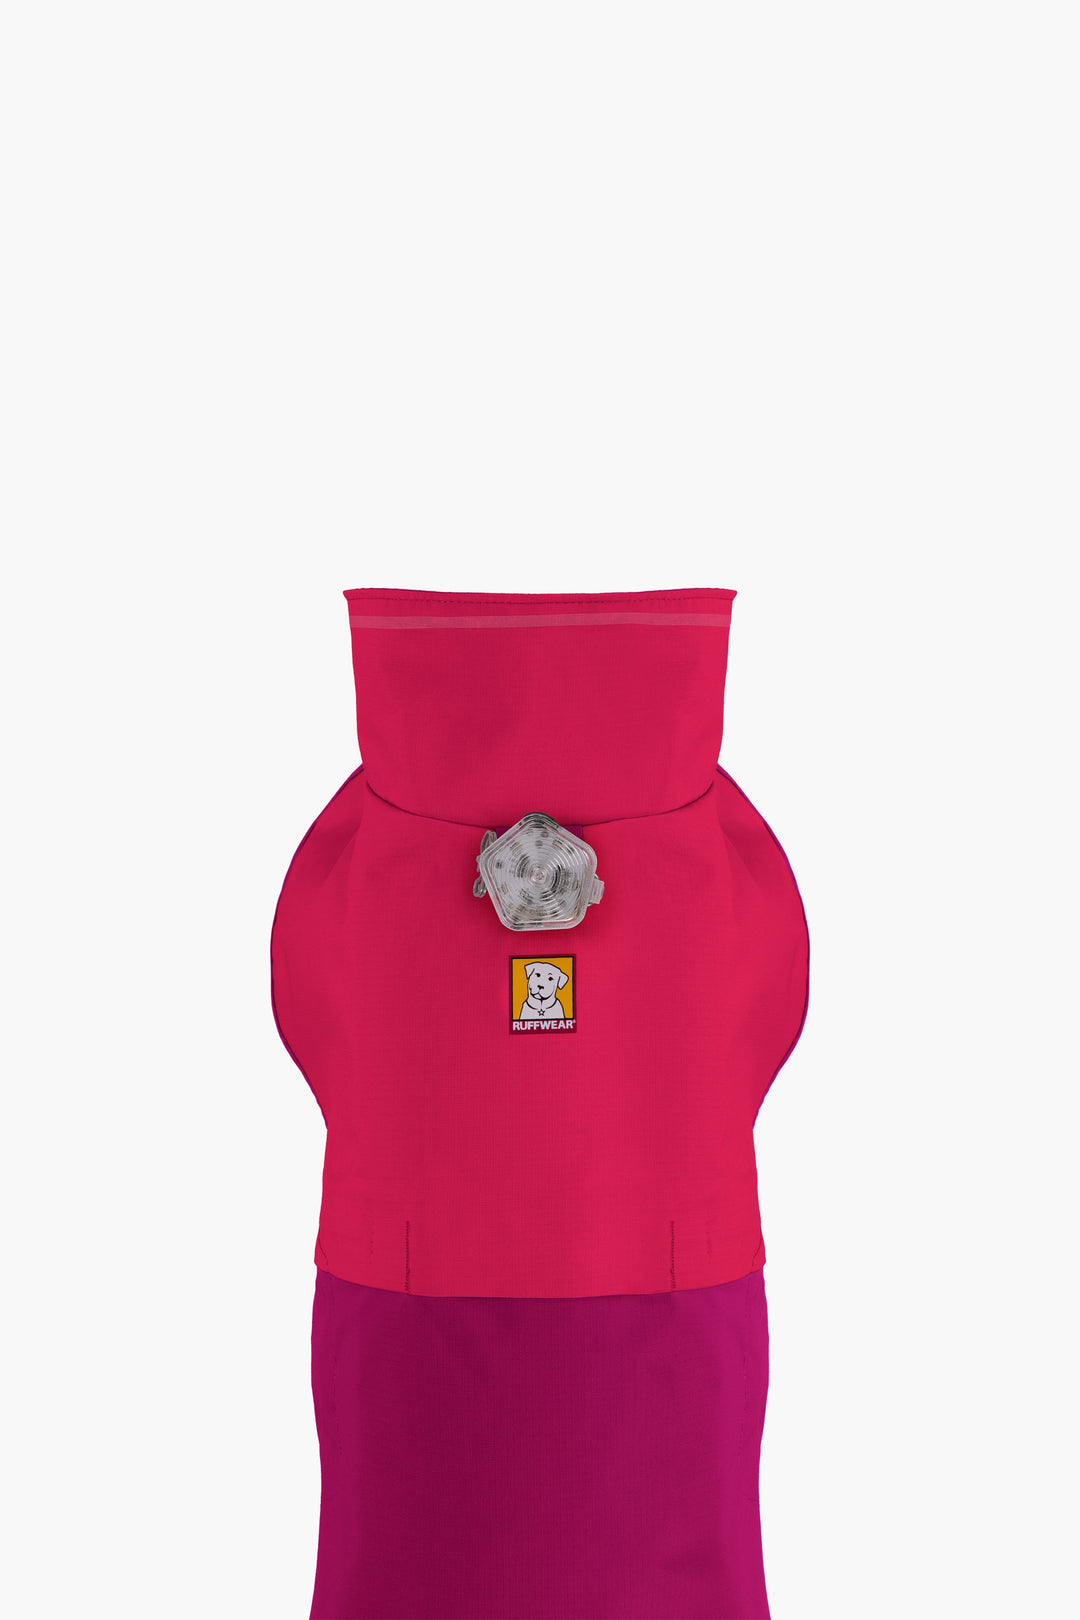 Ruffwear Dog Coat, Sun Shower Jacket in Hibiscus Pink